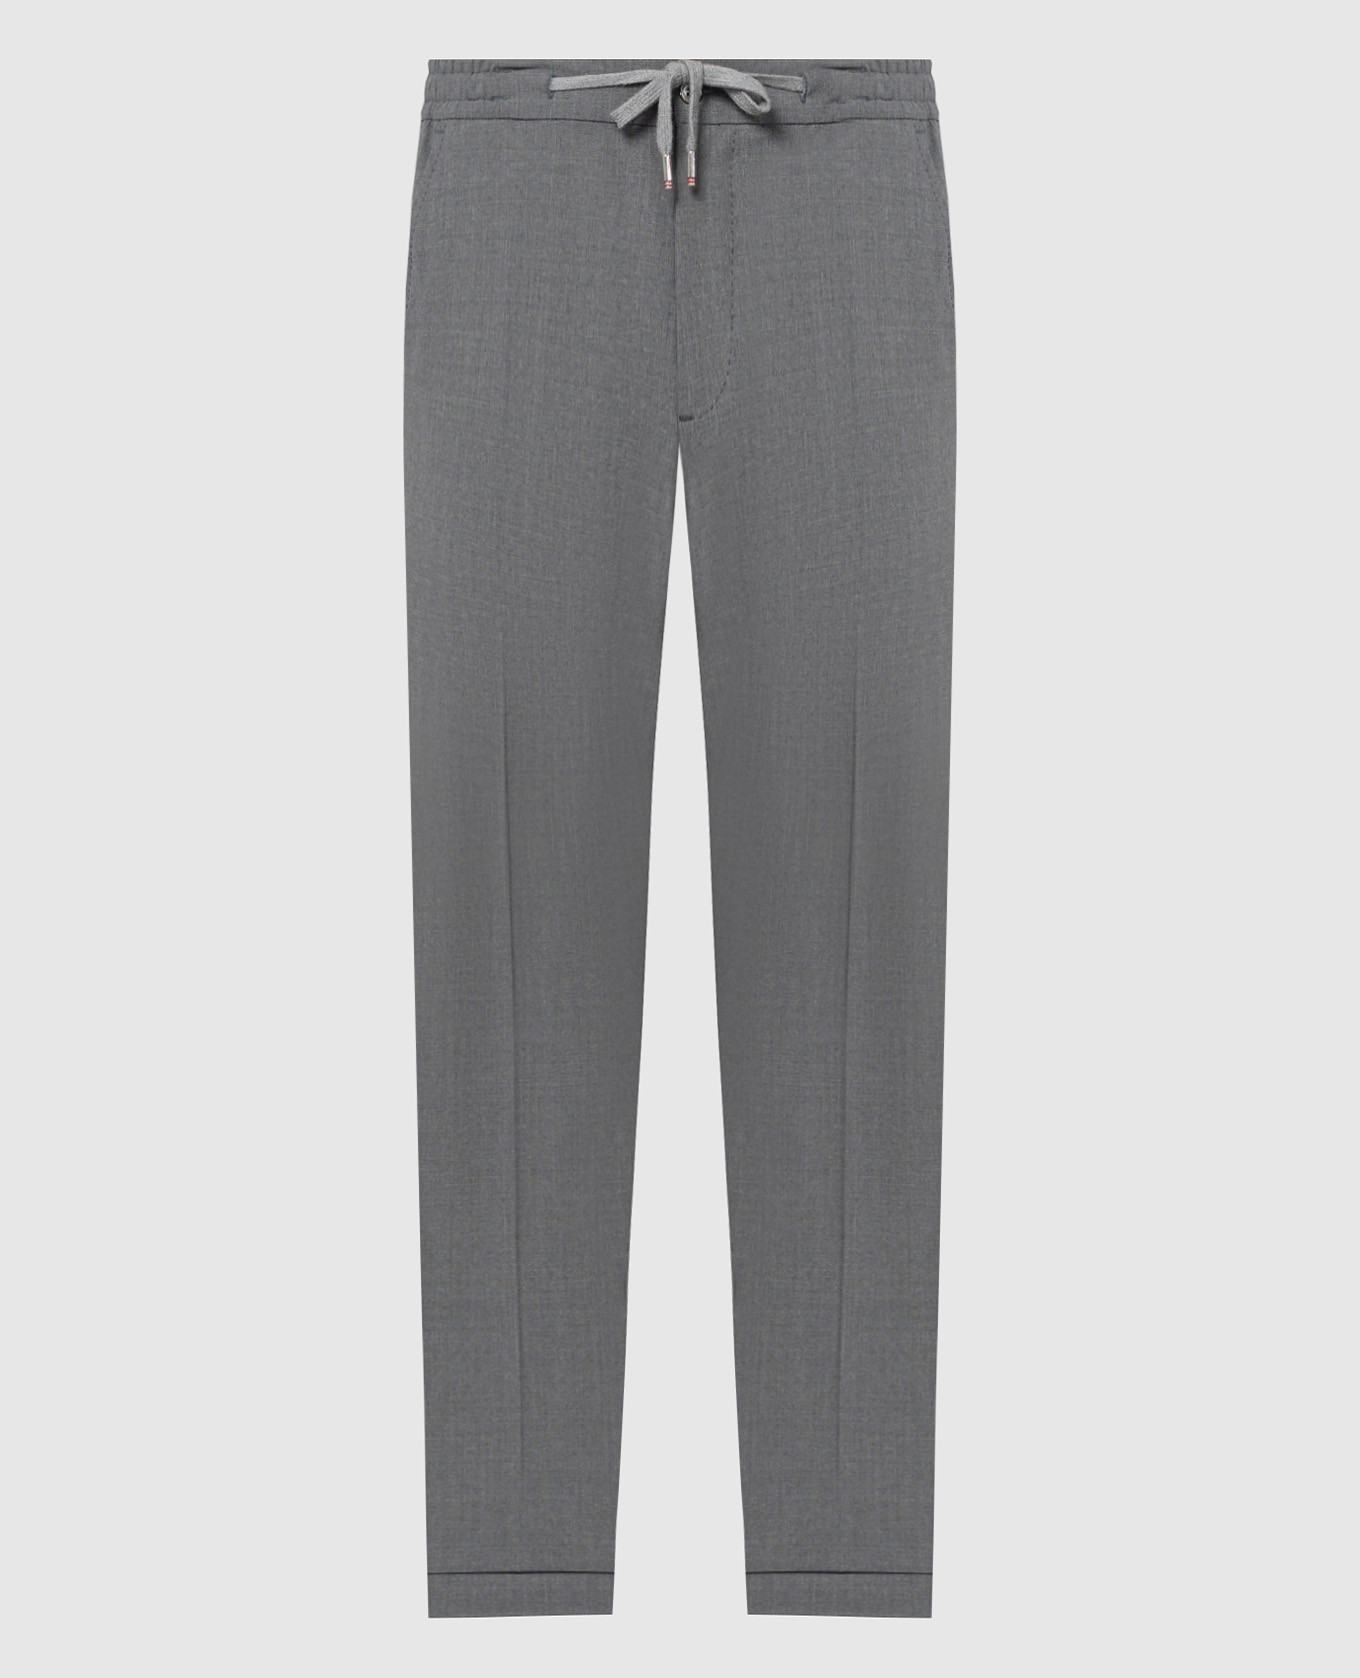 CARACCIOLO gray wool trousers